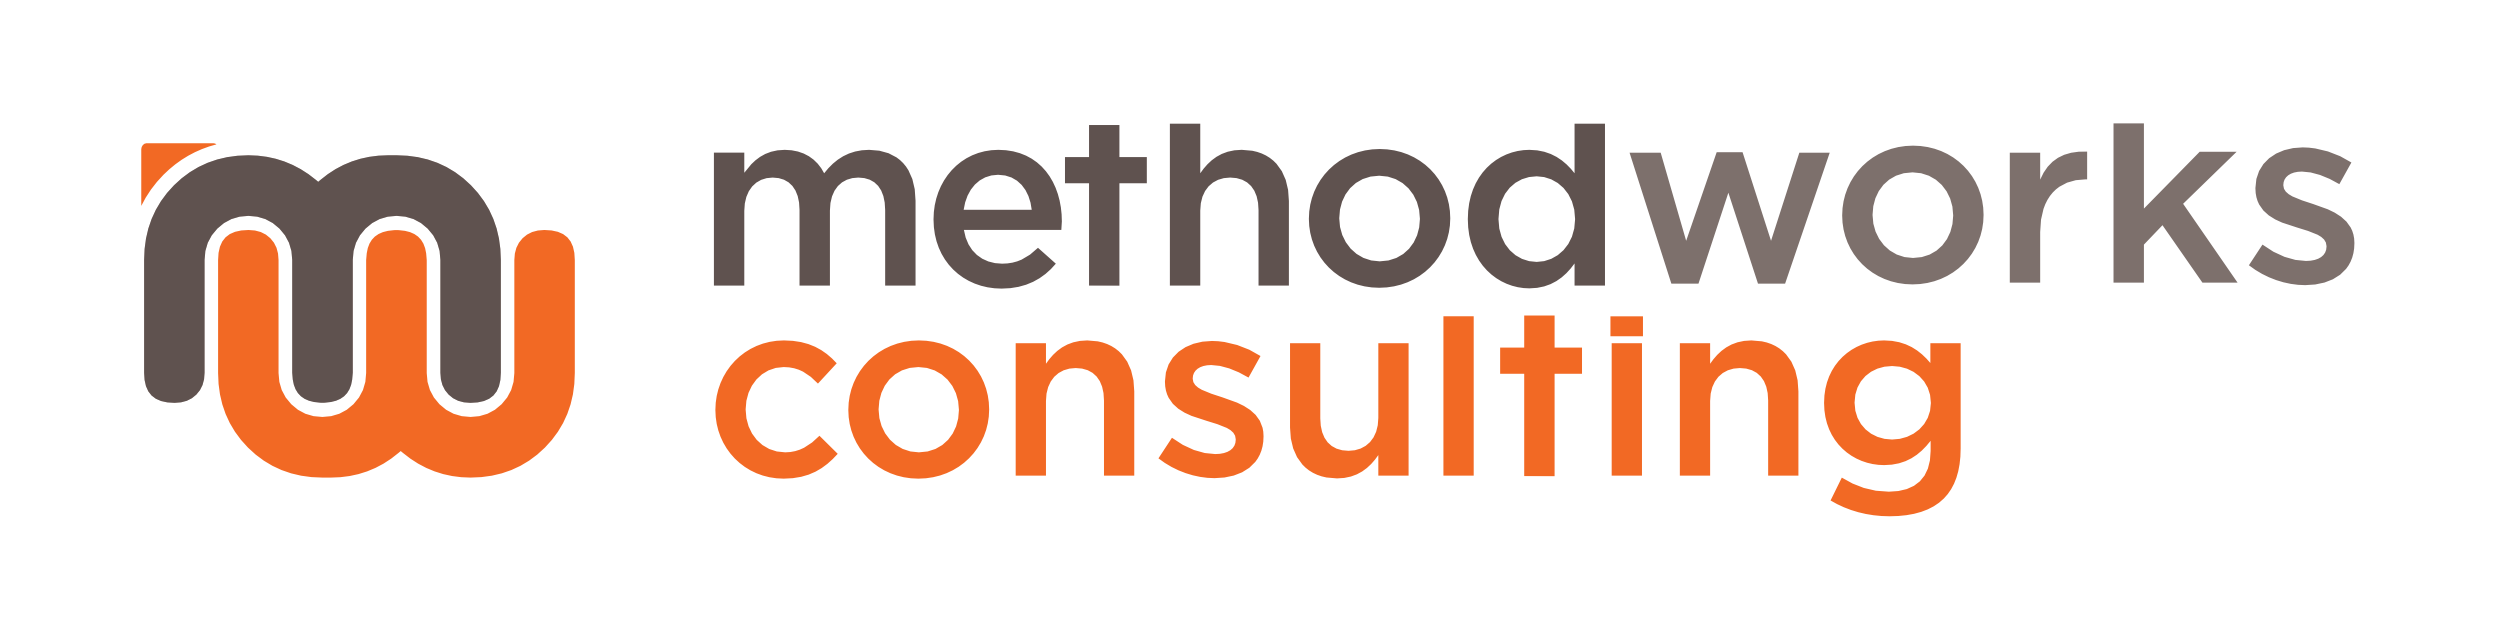 MethodWorks Consulting Logo_22